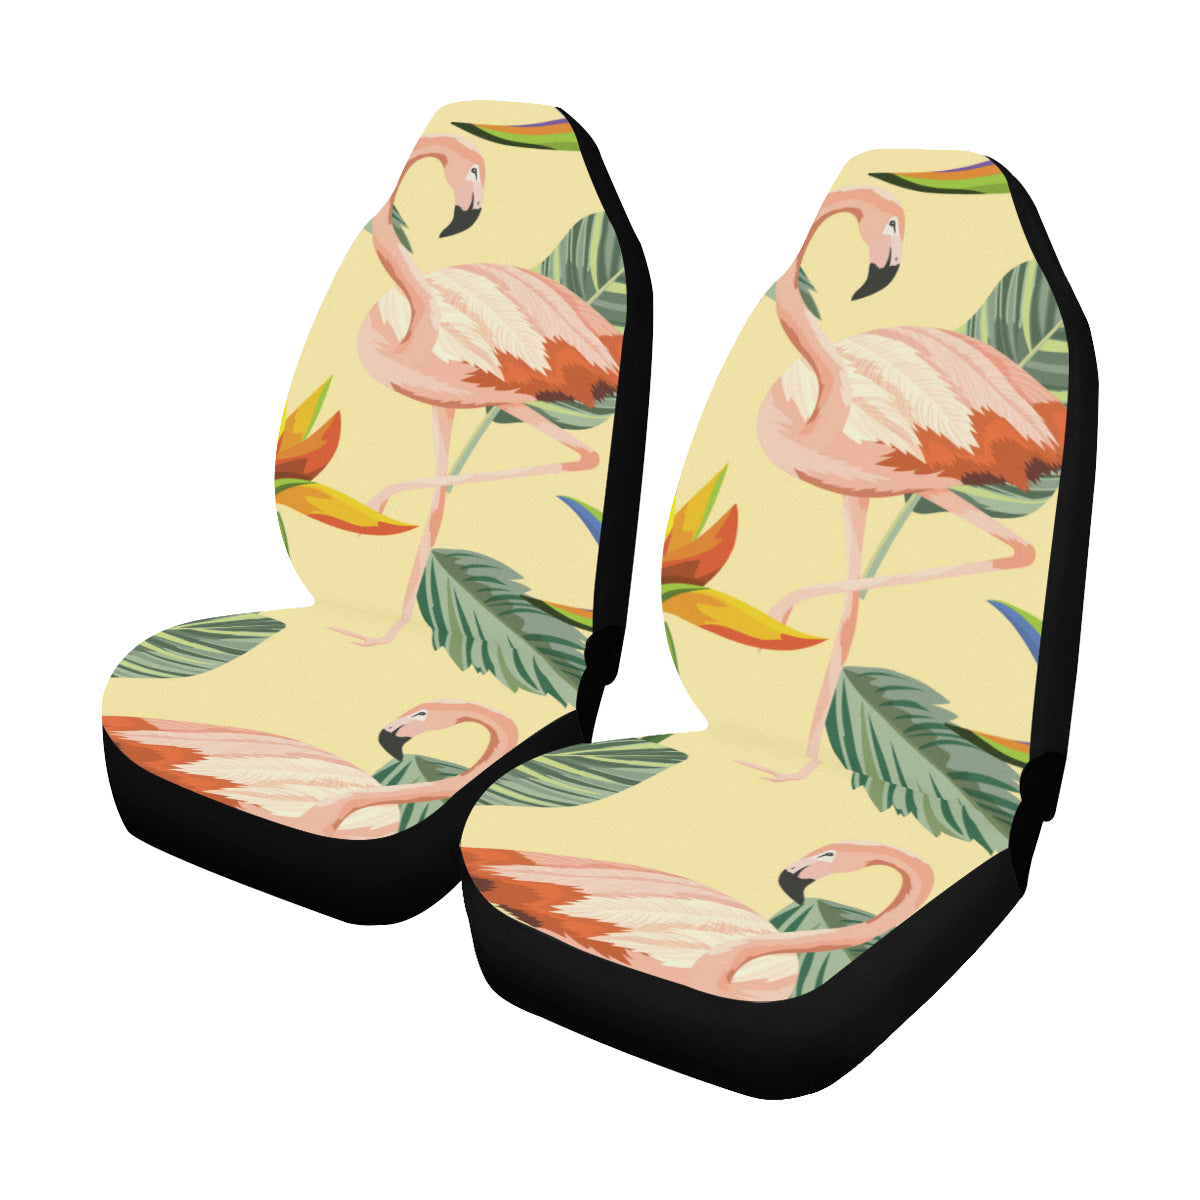 Flamingo Car Seat Covers - Multiple Styles - The Flamingo Shop